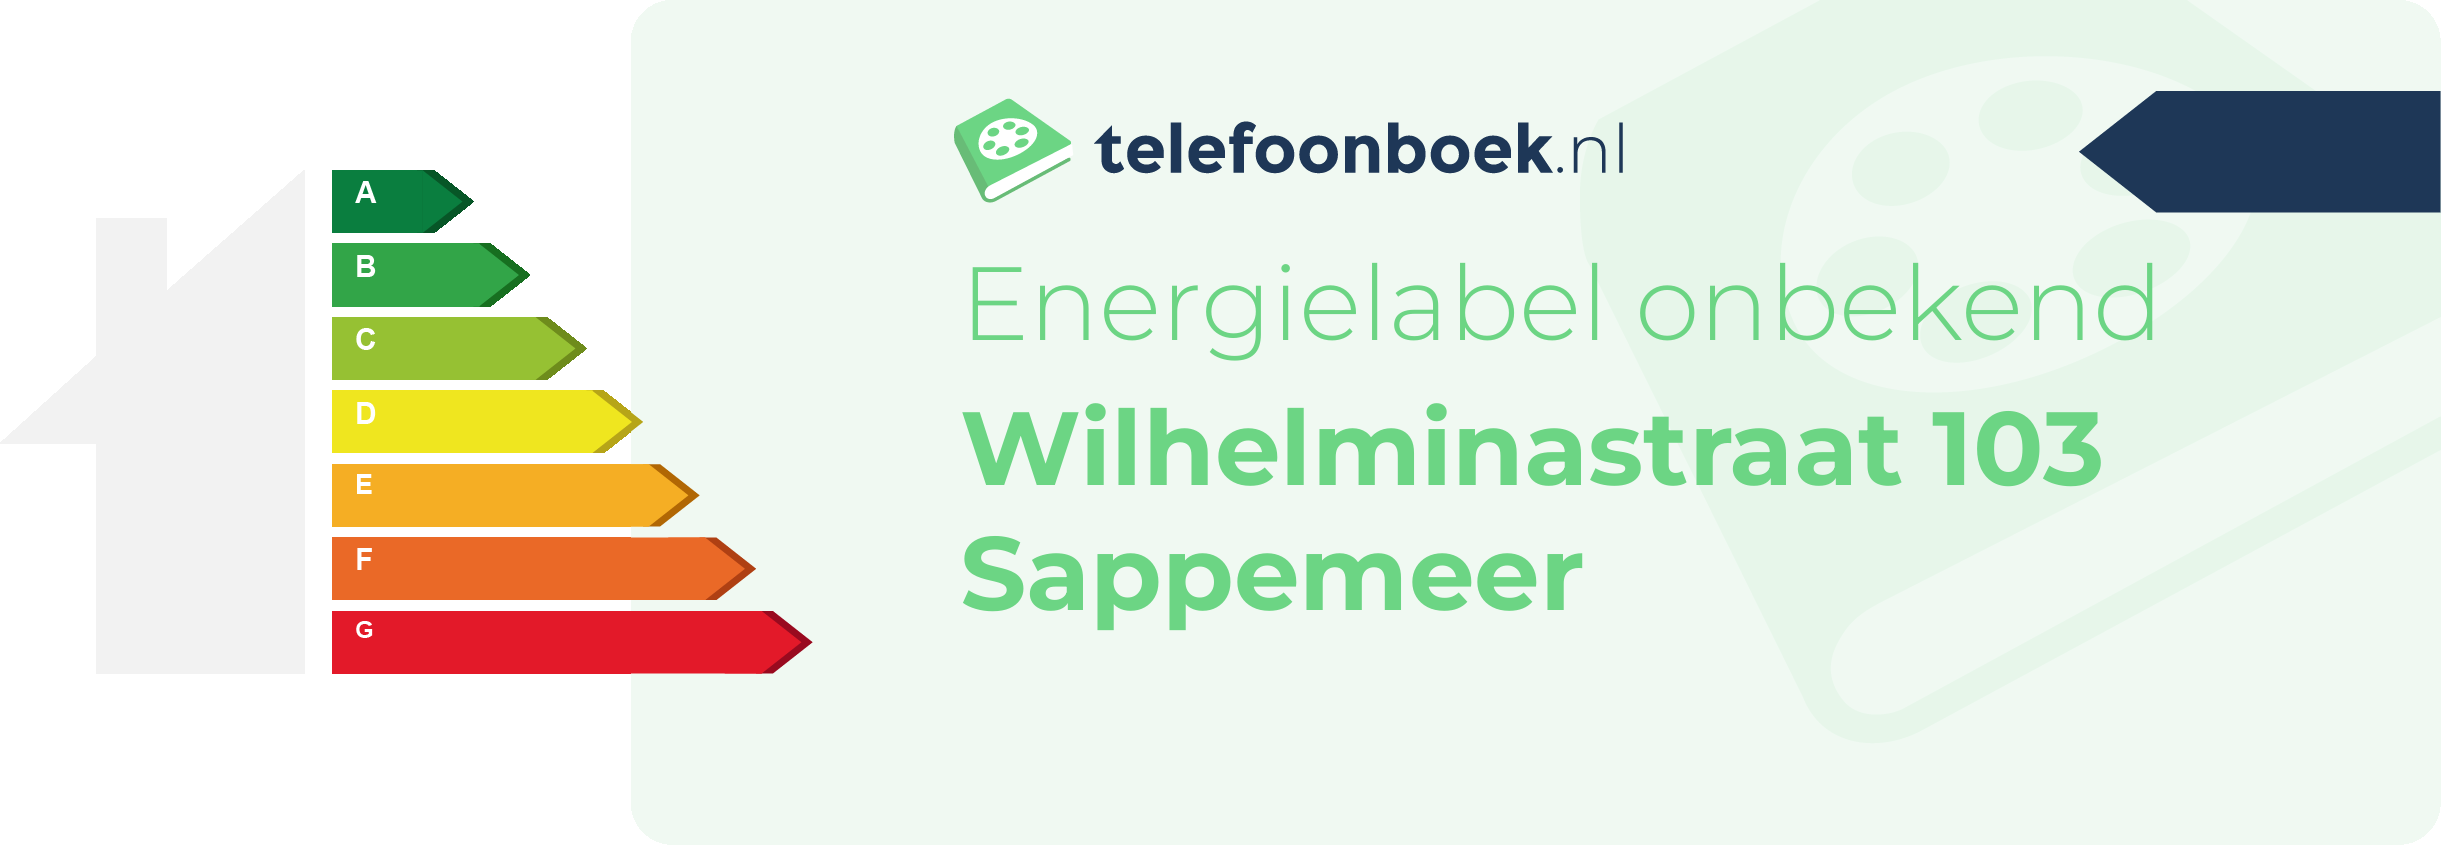 Energielabel Wilhelminastraat 103 Sappemeer